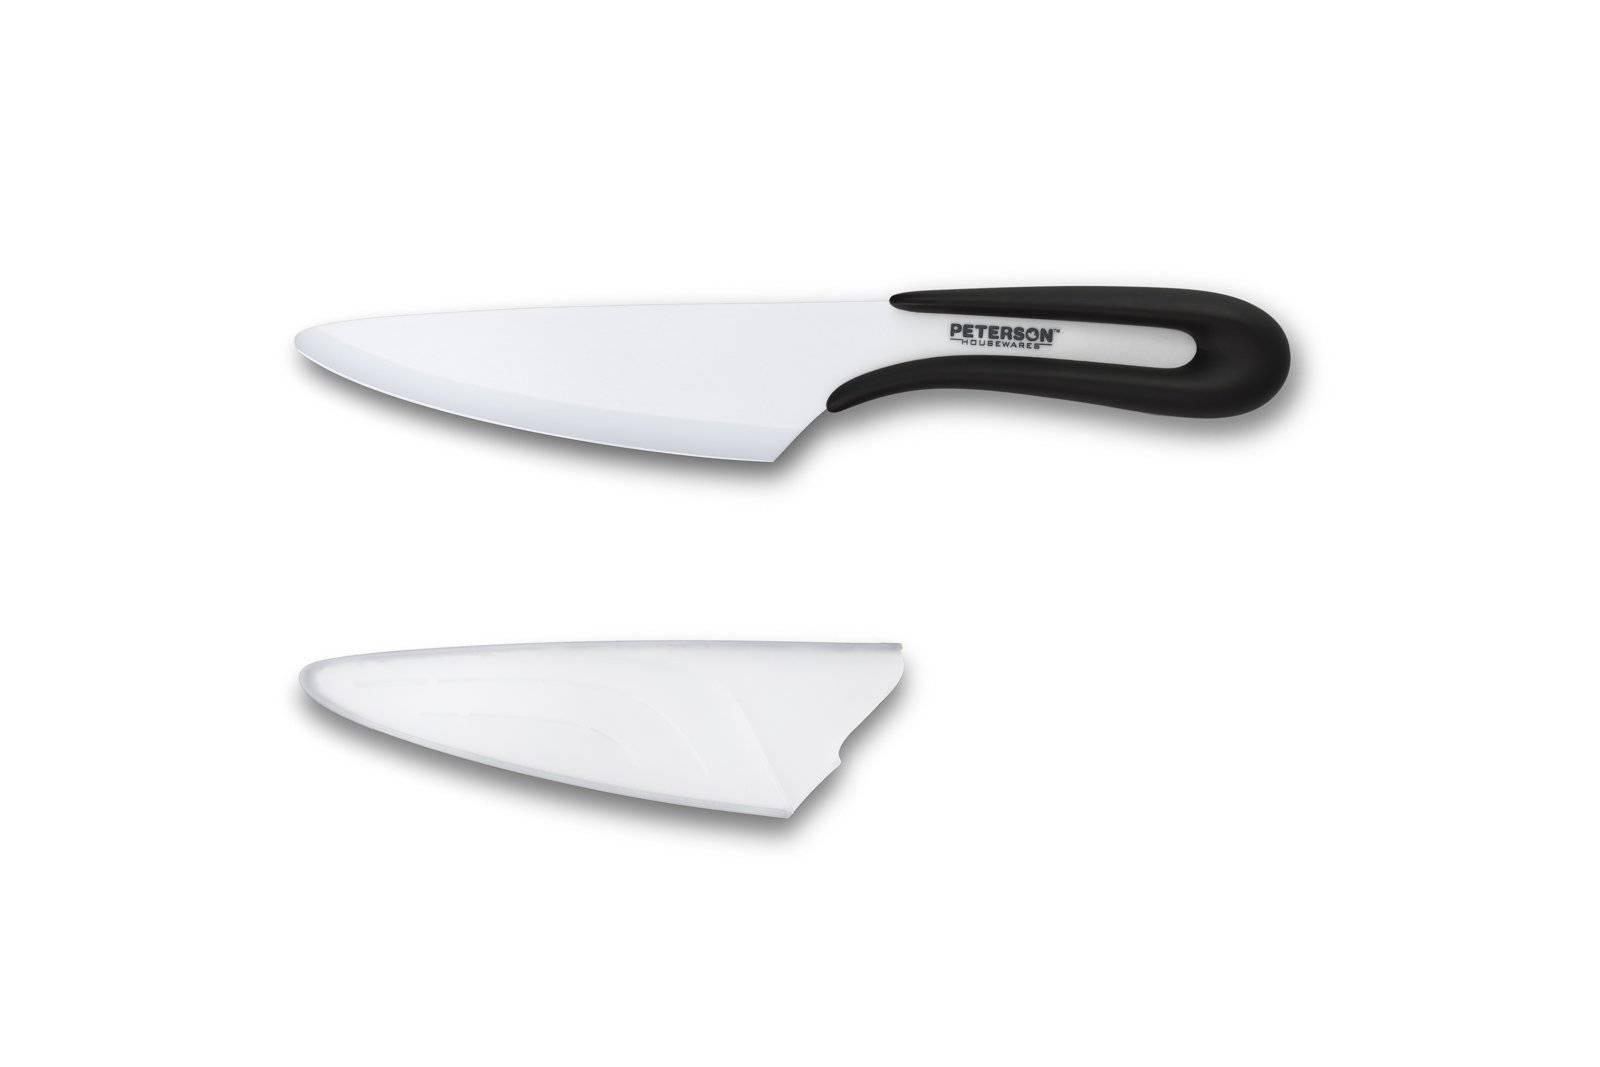 Ceramic knife - 5" U HANDLE CERAMIC KNIFE by Peterson Housewares & Artwares - Vysn